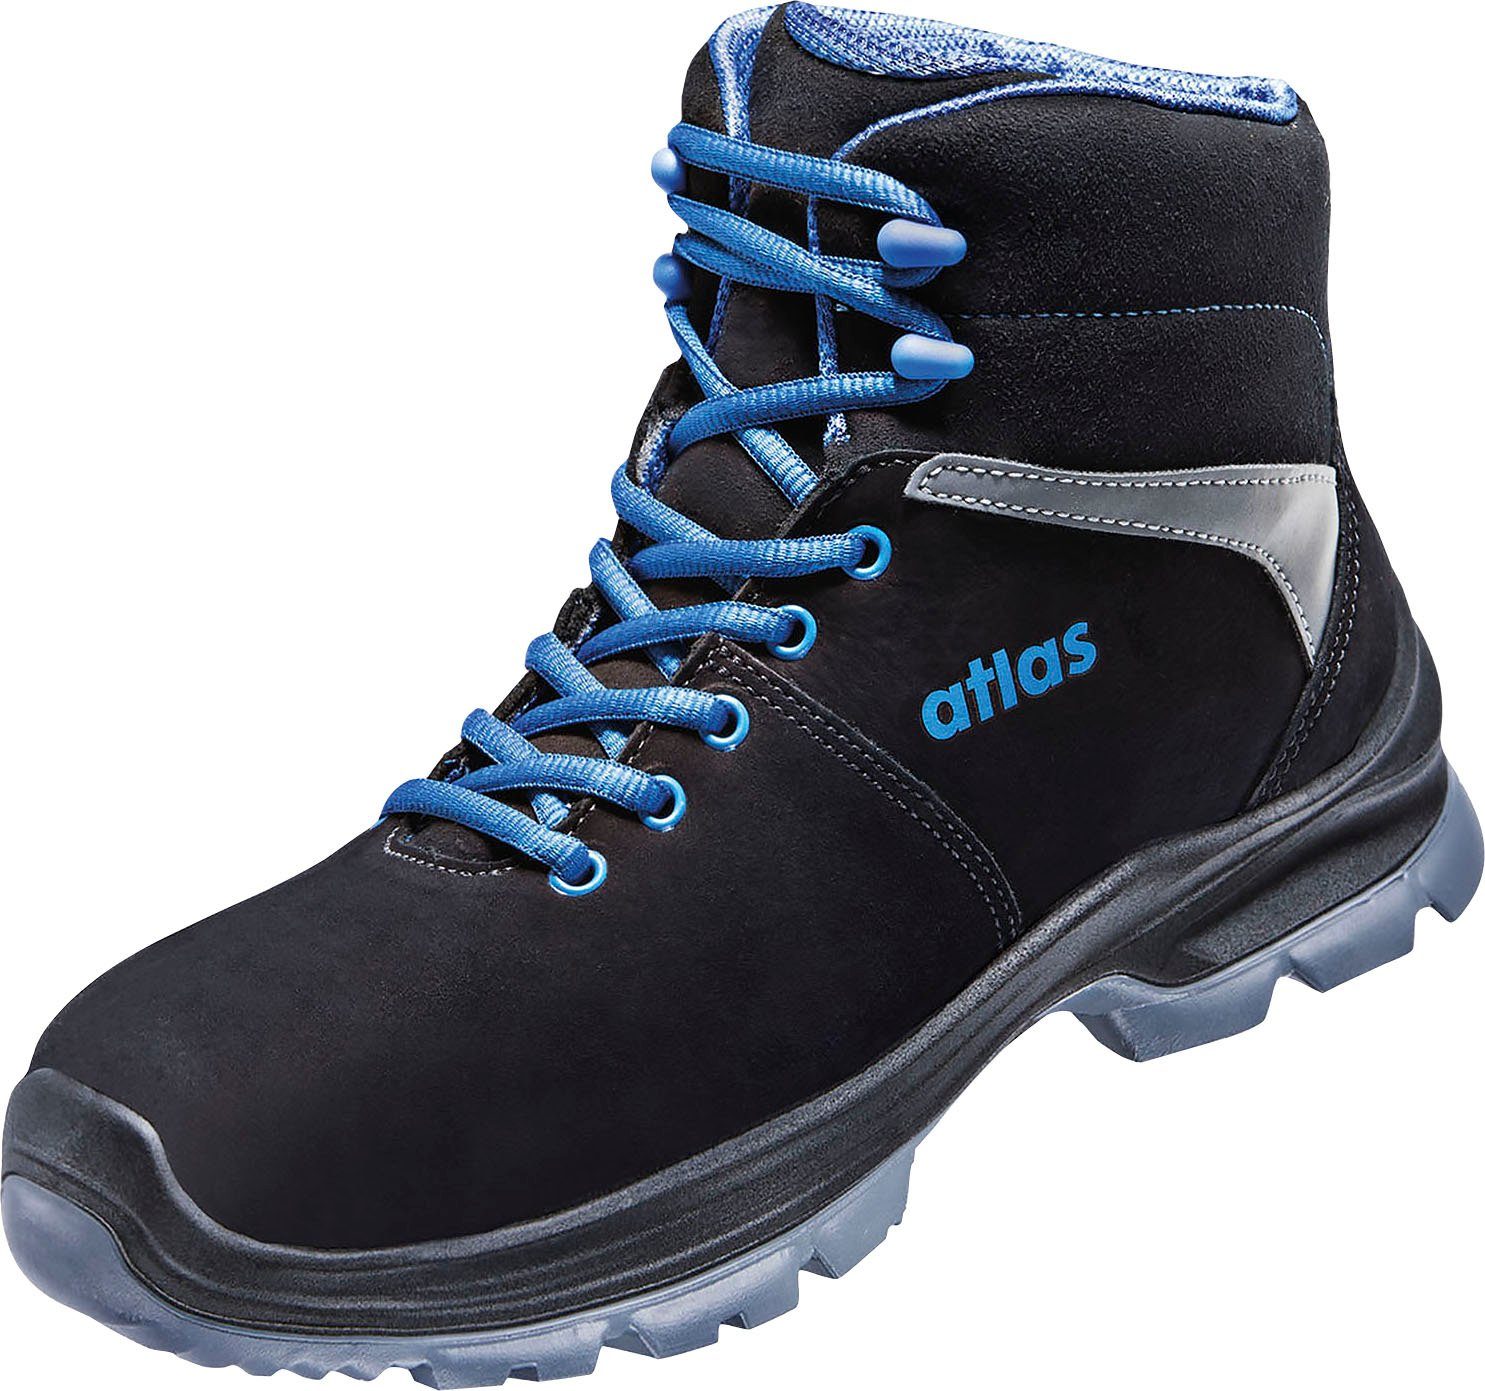 Schuhe blue Sicherheitsschuh Atlas EN20345 805 S3 2.0 494 XP SL ESD